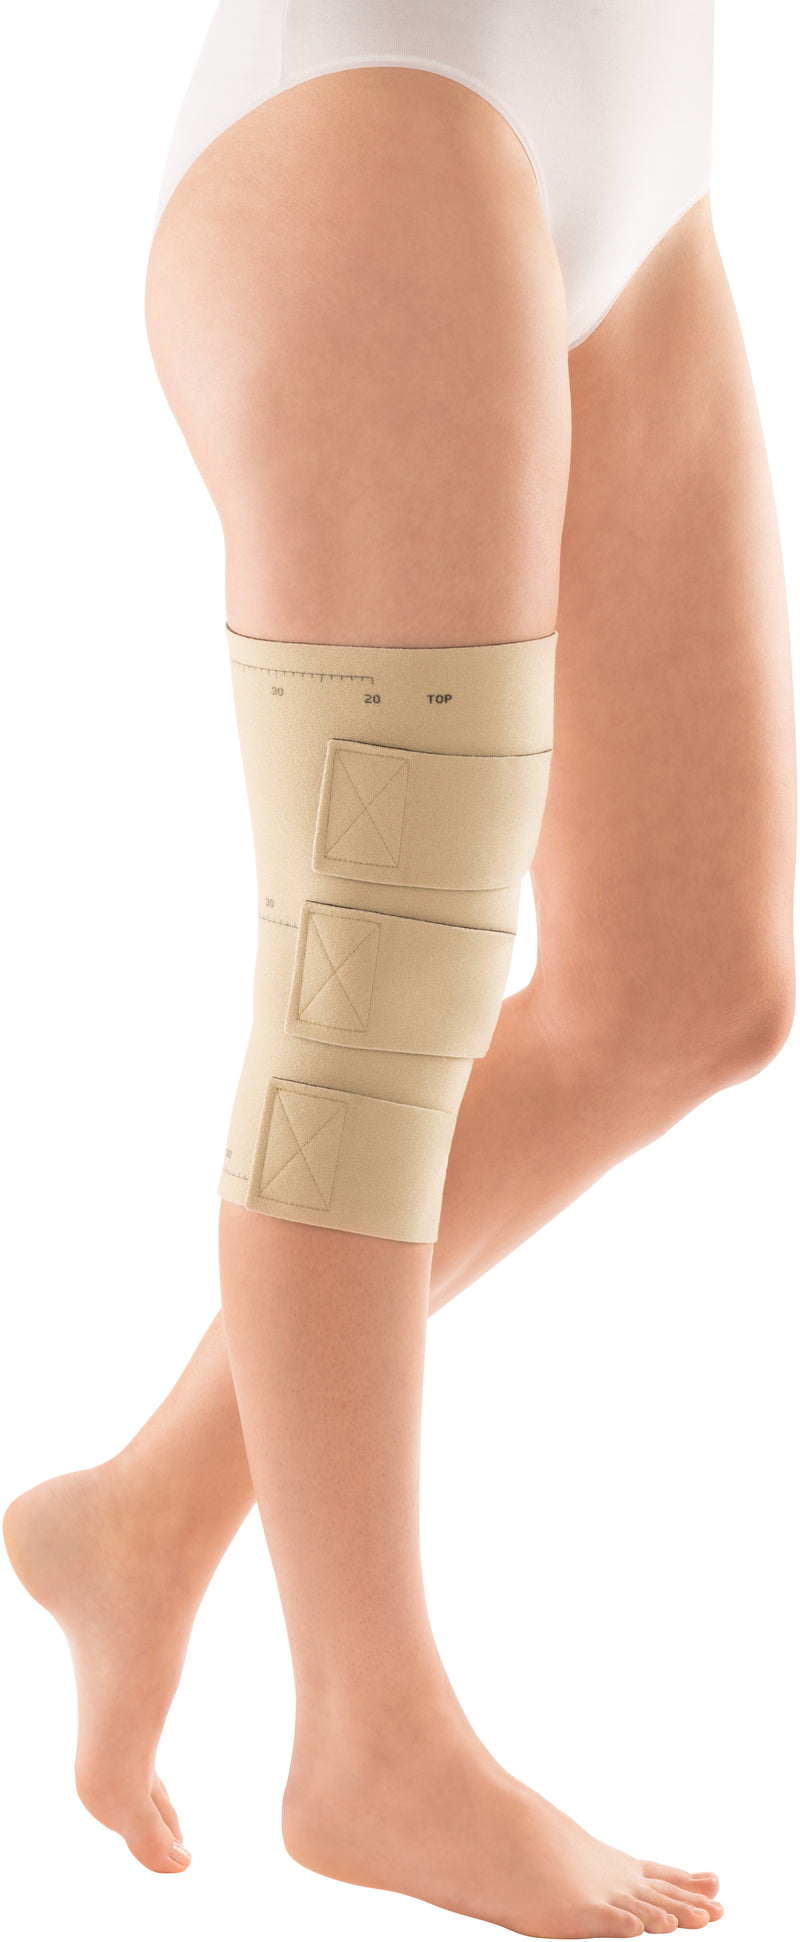 circaid Reduction Kit Knee Spine - 2 Pack, White, Standard-Standard